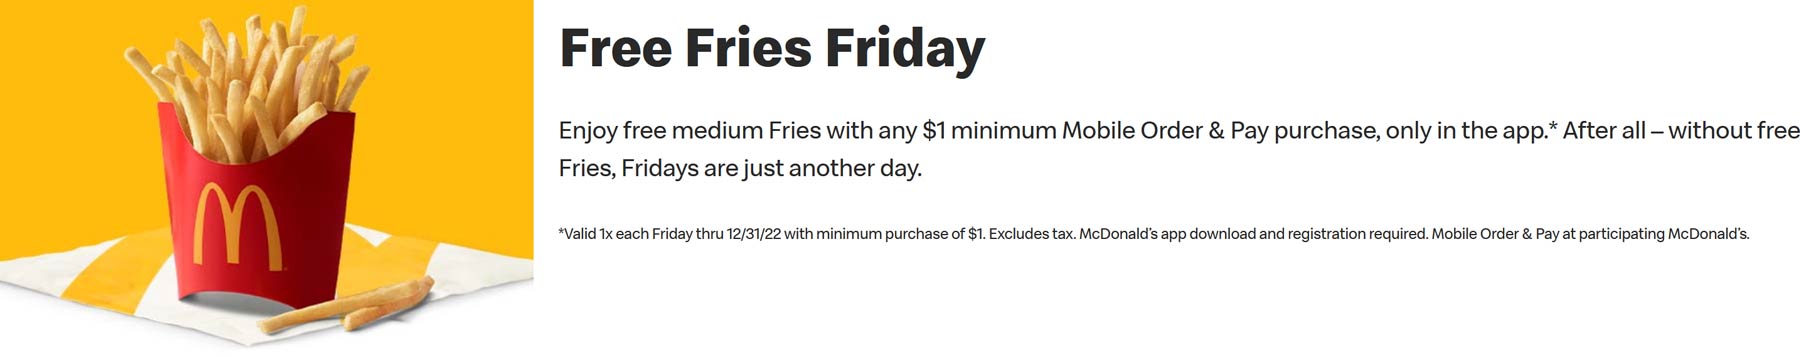 McDonalds restaurants Coupon  Free fries via mobile today at McDonalds #mcdonalds 